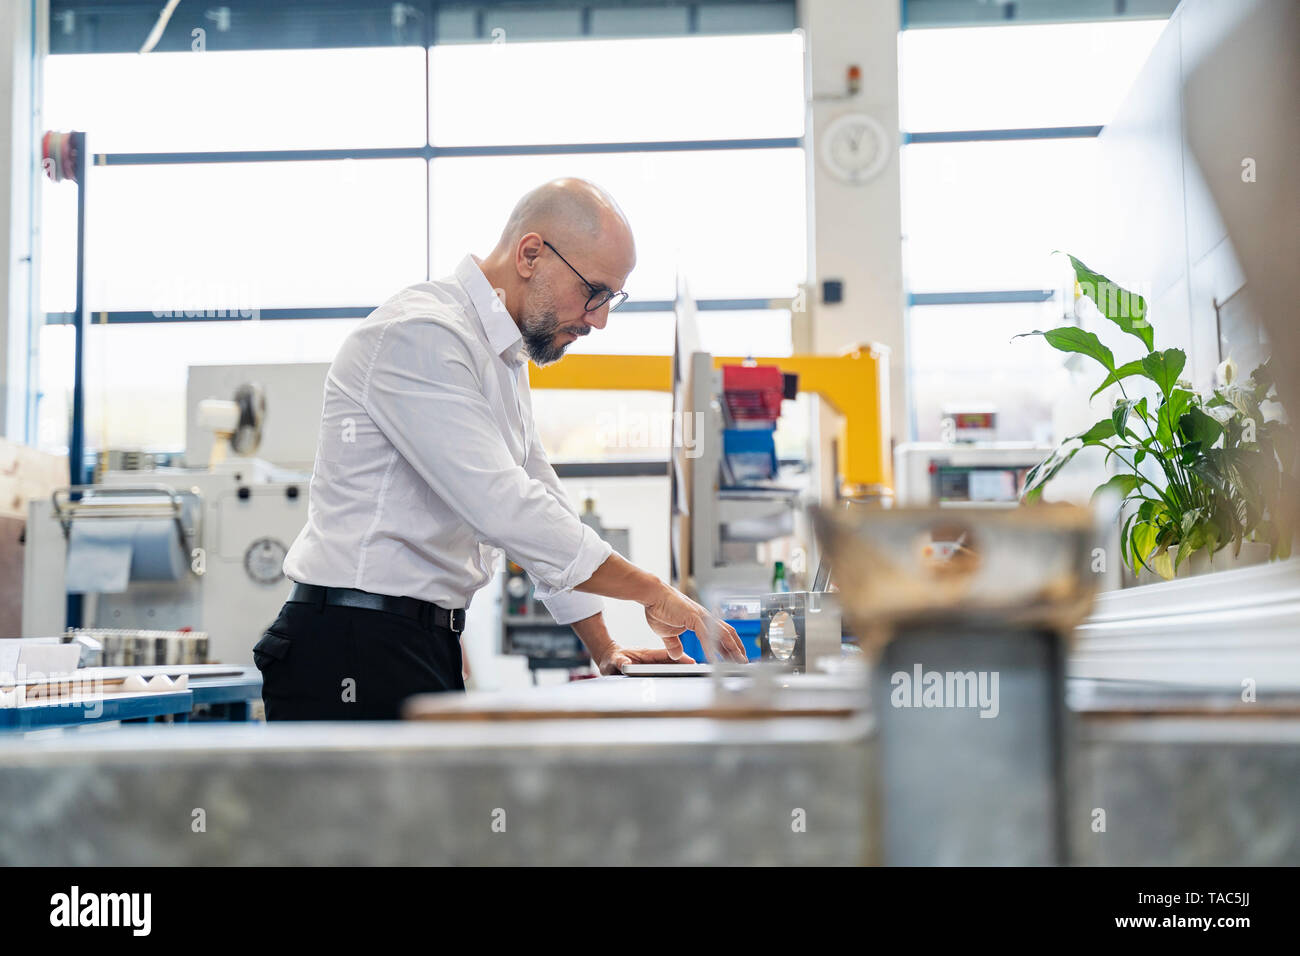 Focused businessman examining workpiece in factory Stock Photo